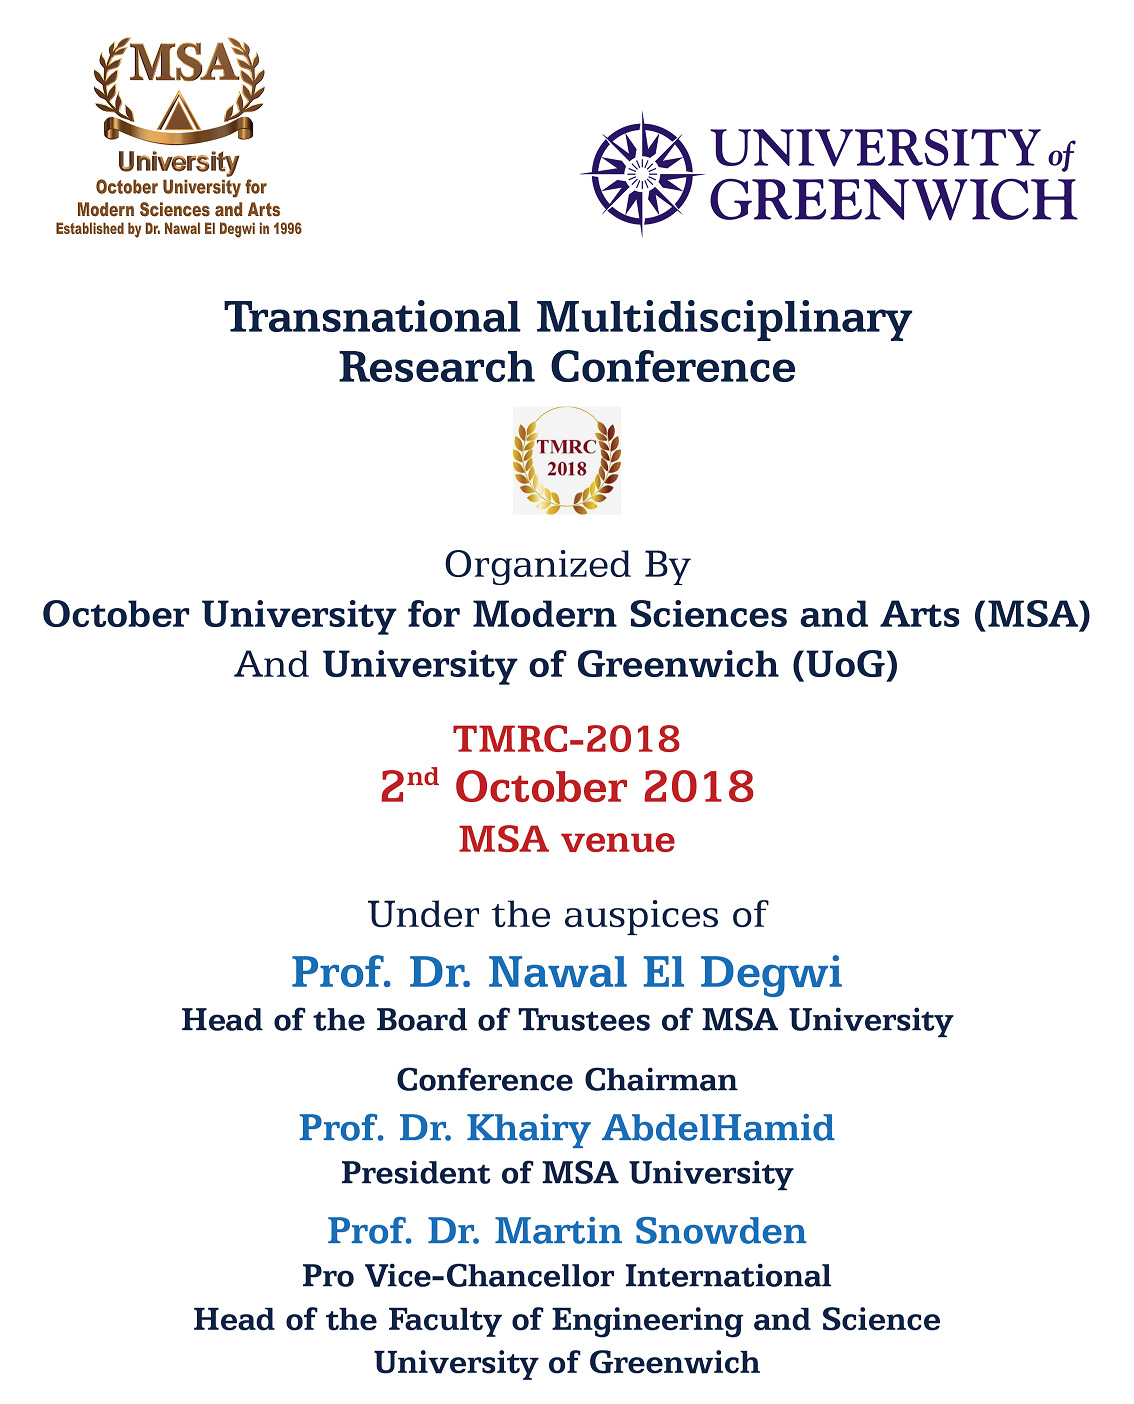 MSA University - Transnational Multidisciplinary Research Conference